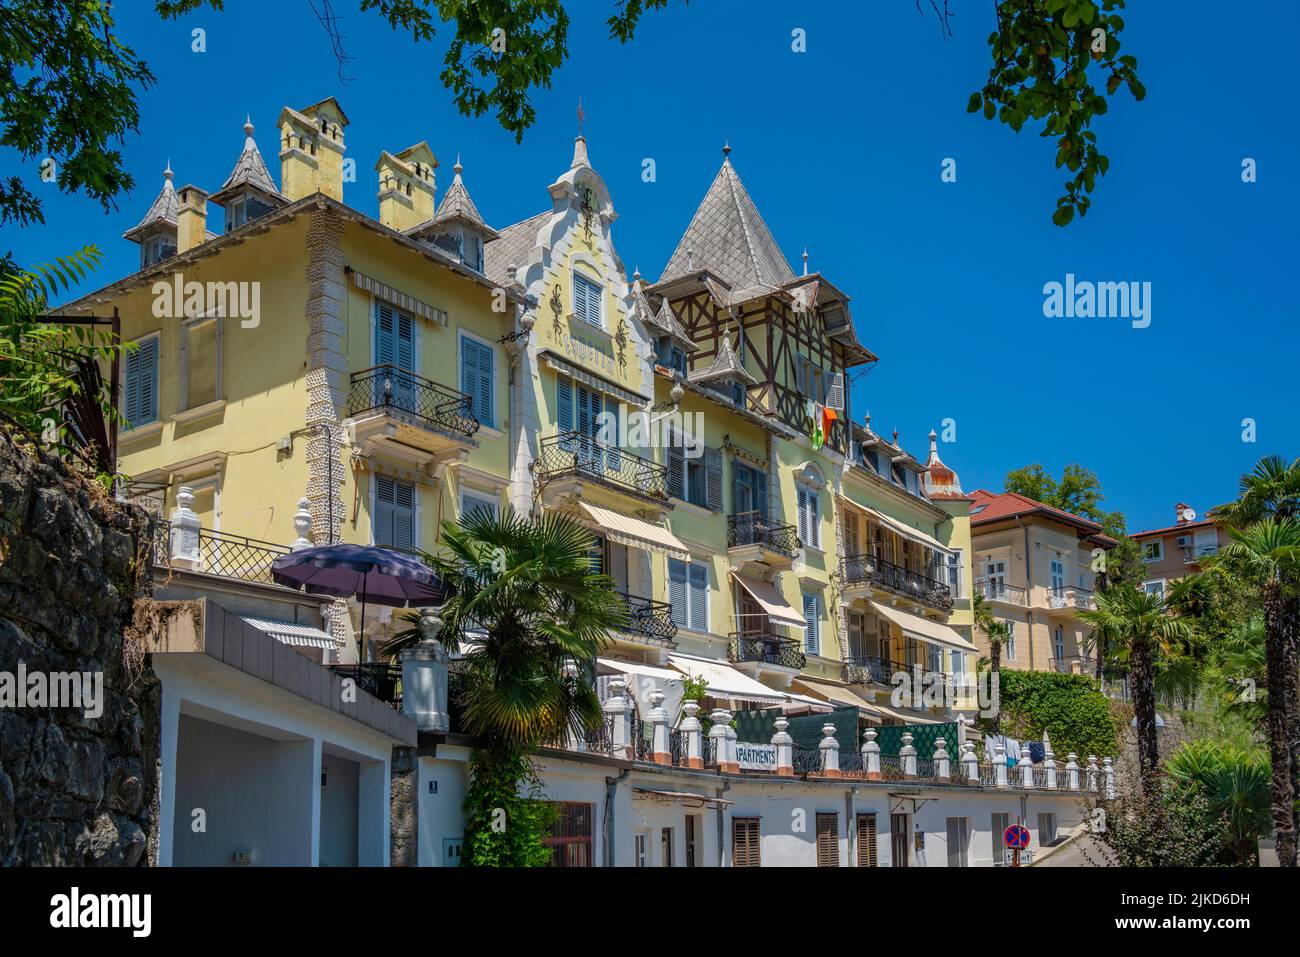 View of ornate buildings overlooking the town of Opatija, Kvarner Bay, Croatia, Europe Stock Photo